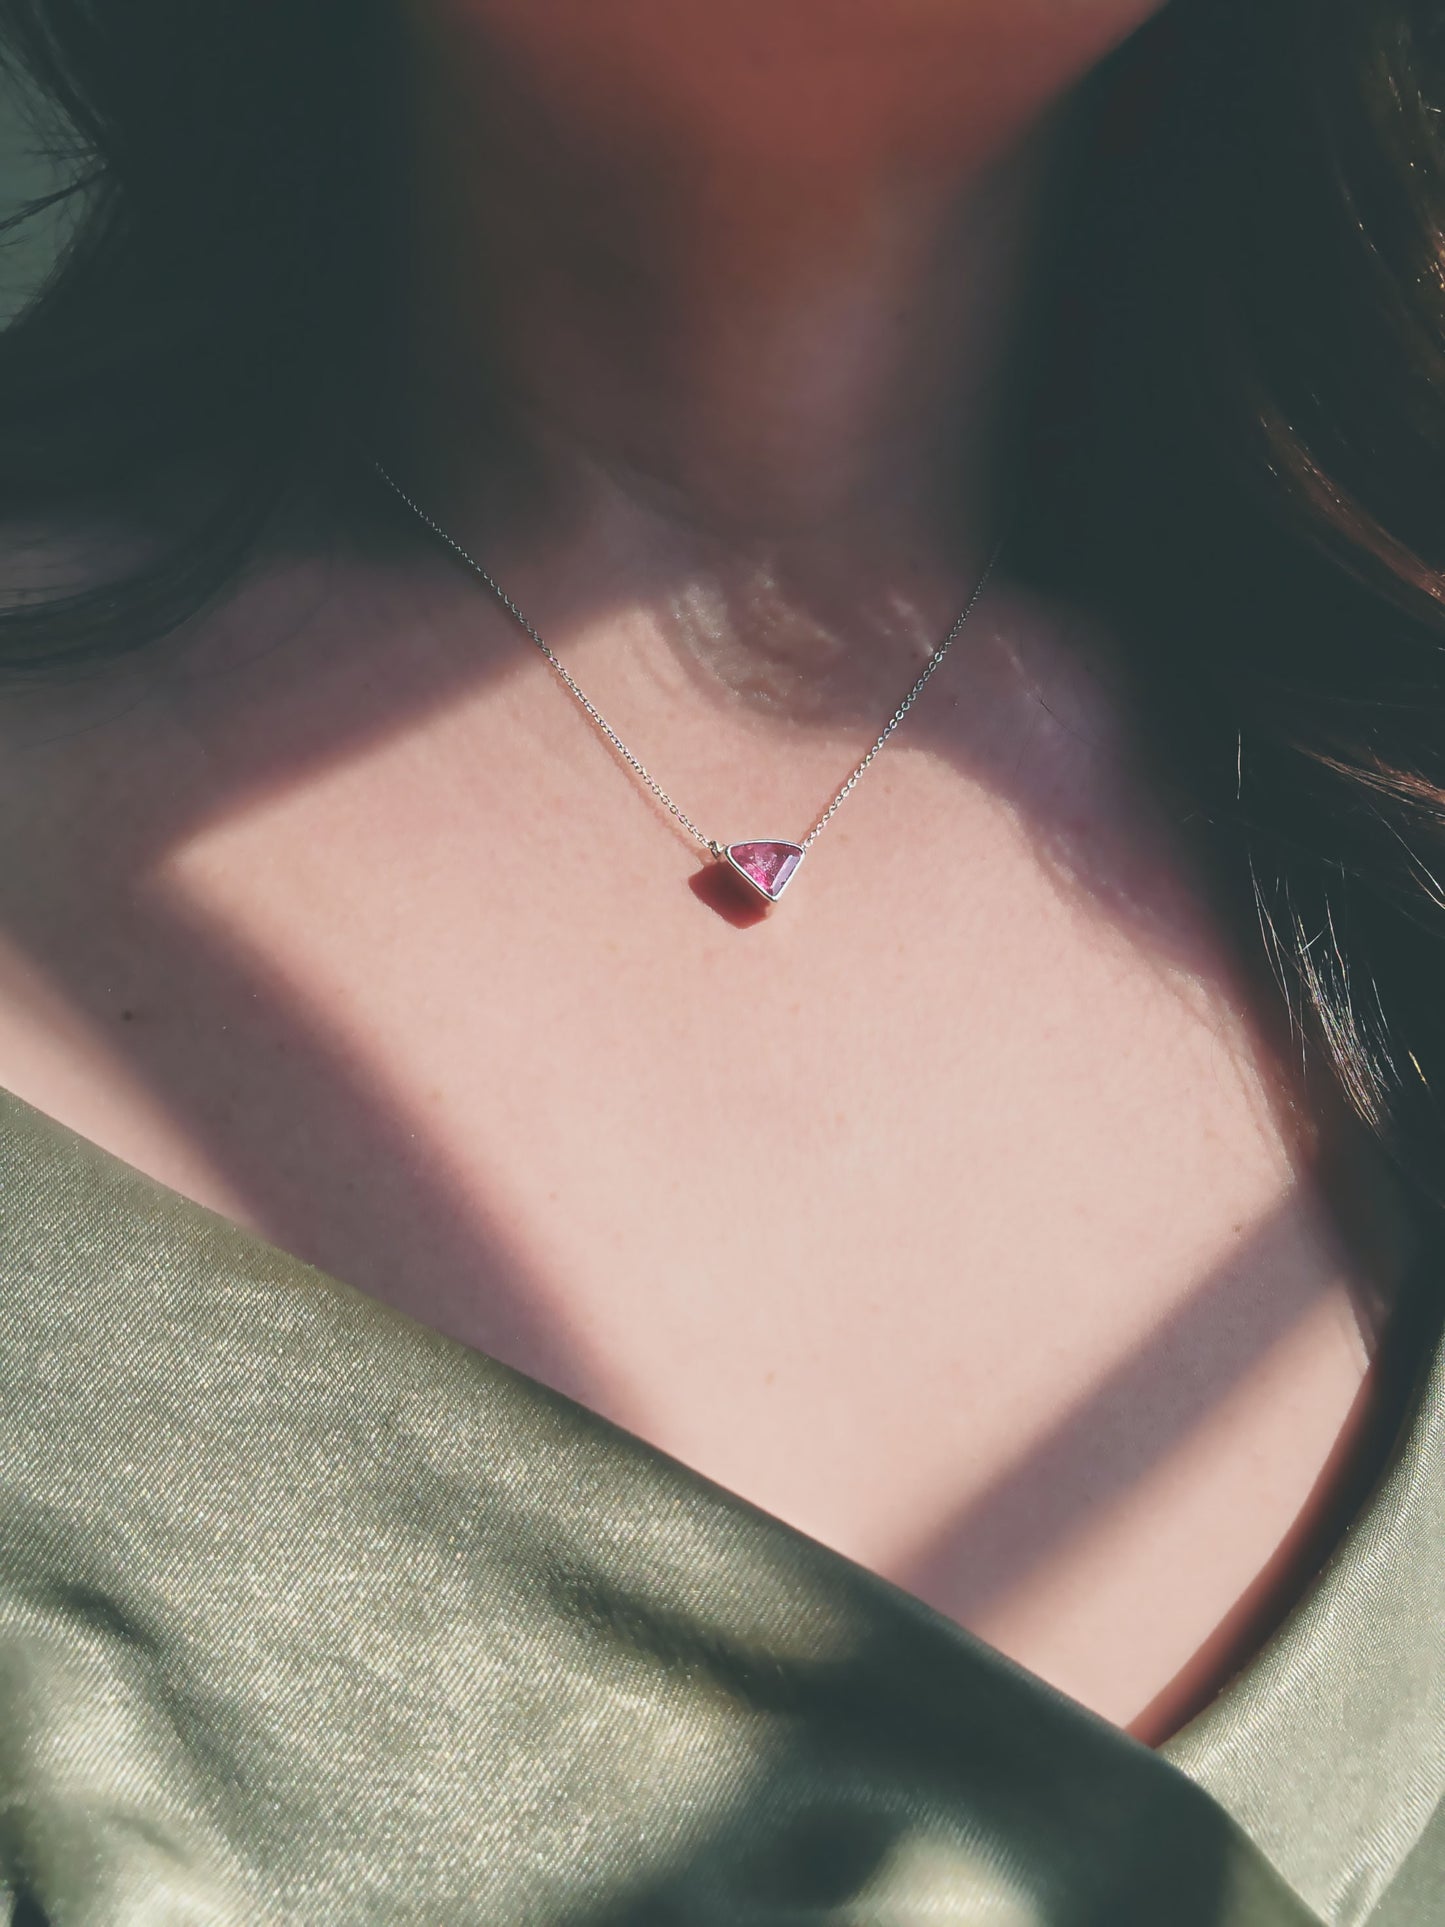 Triangle Cut Pink Tourmaline Necklace